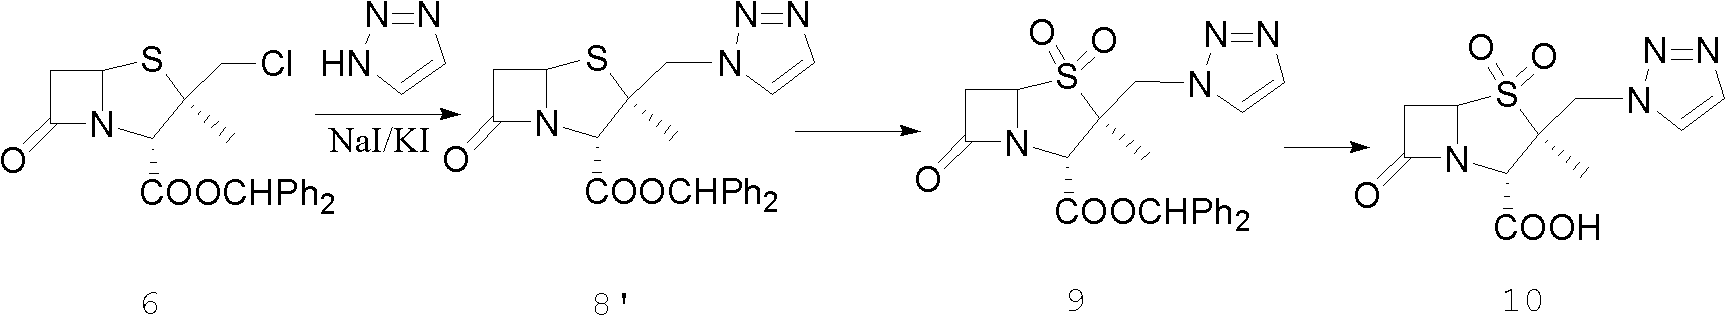 Tazobactam synthesis method